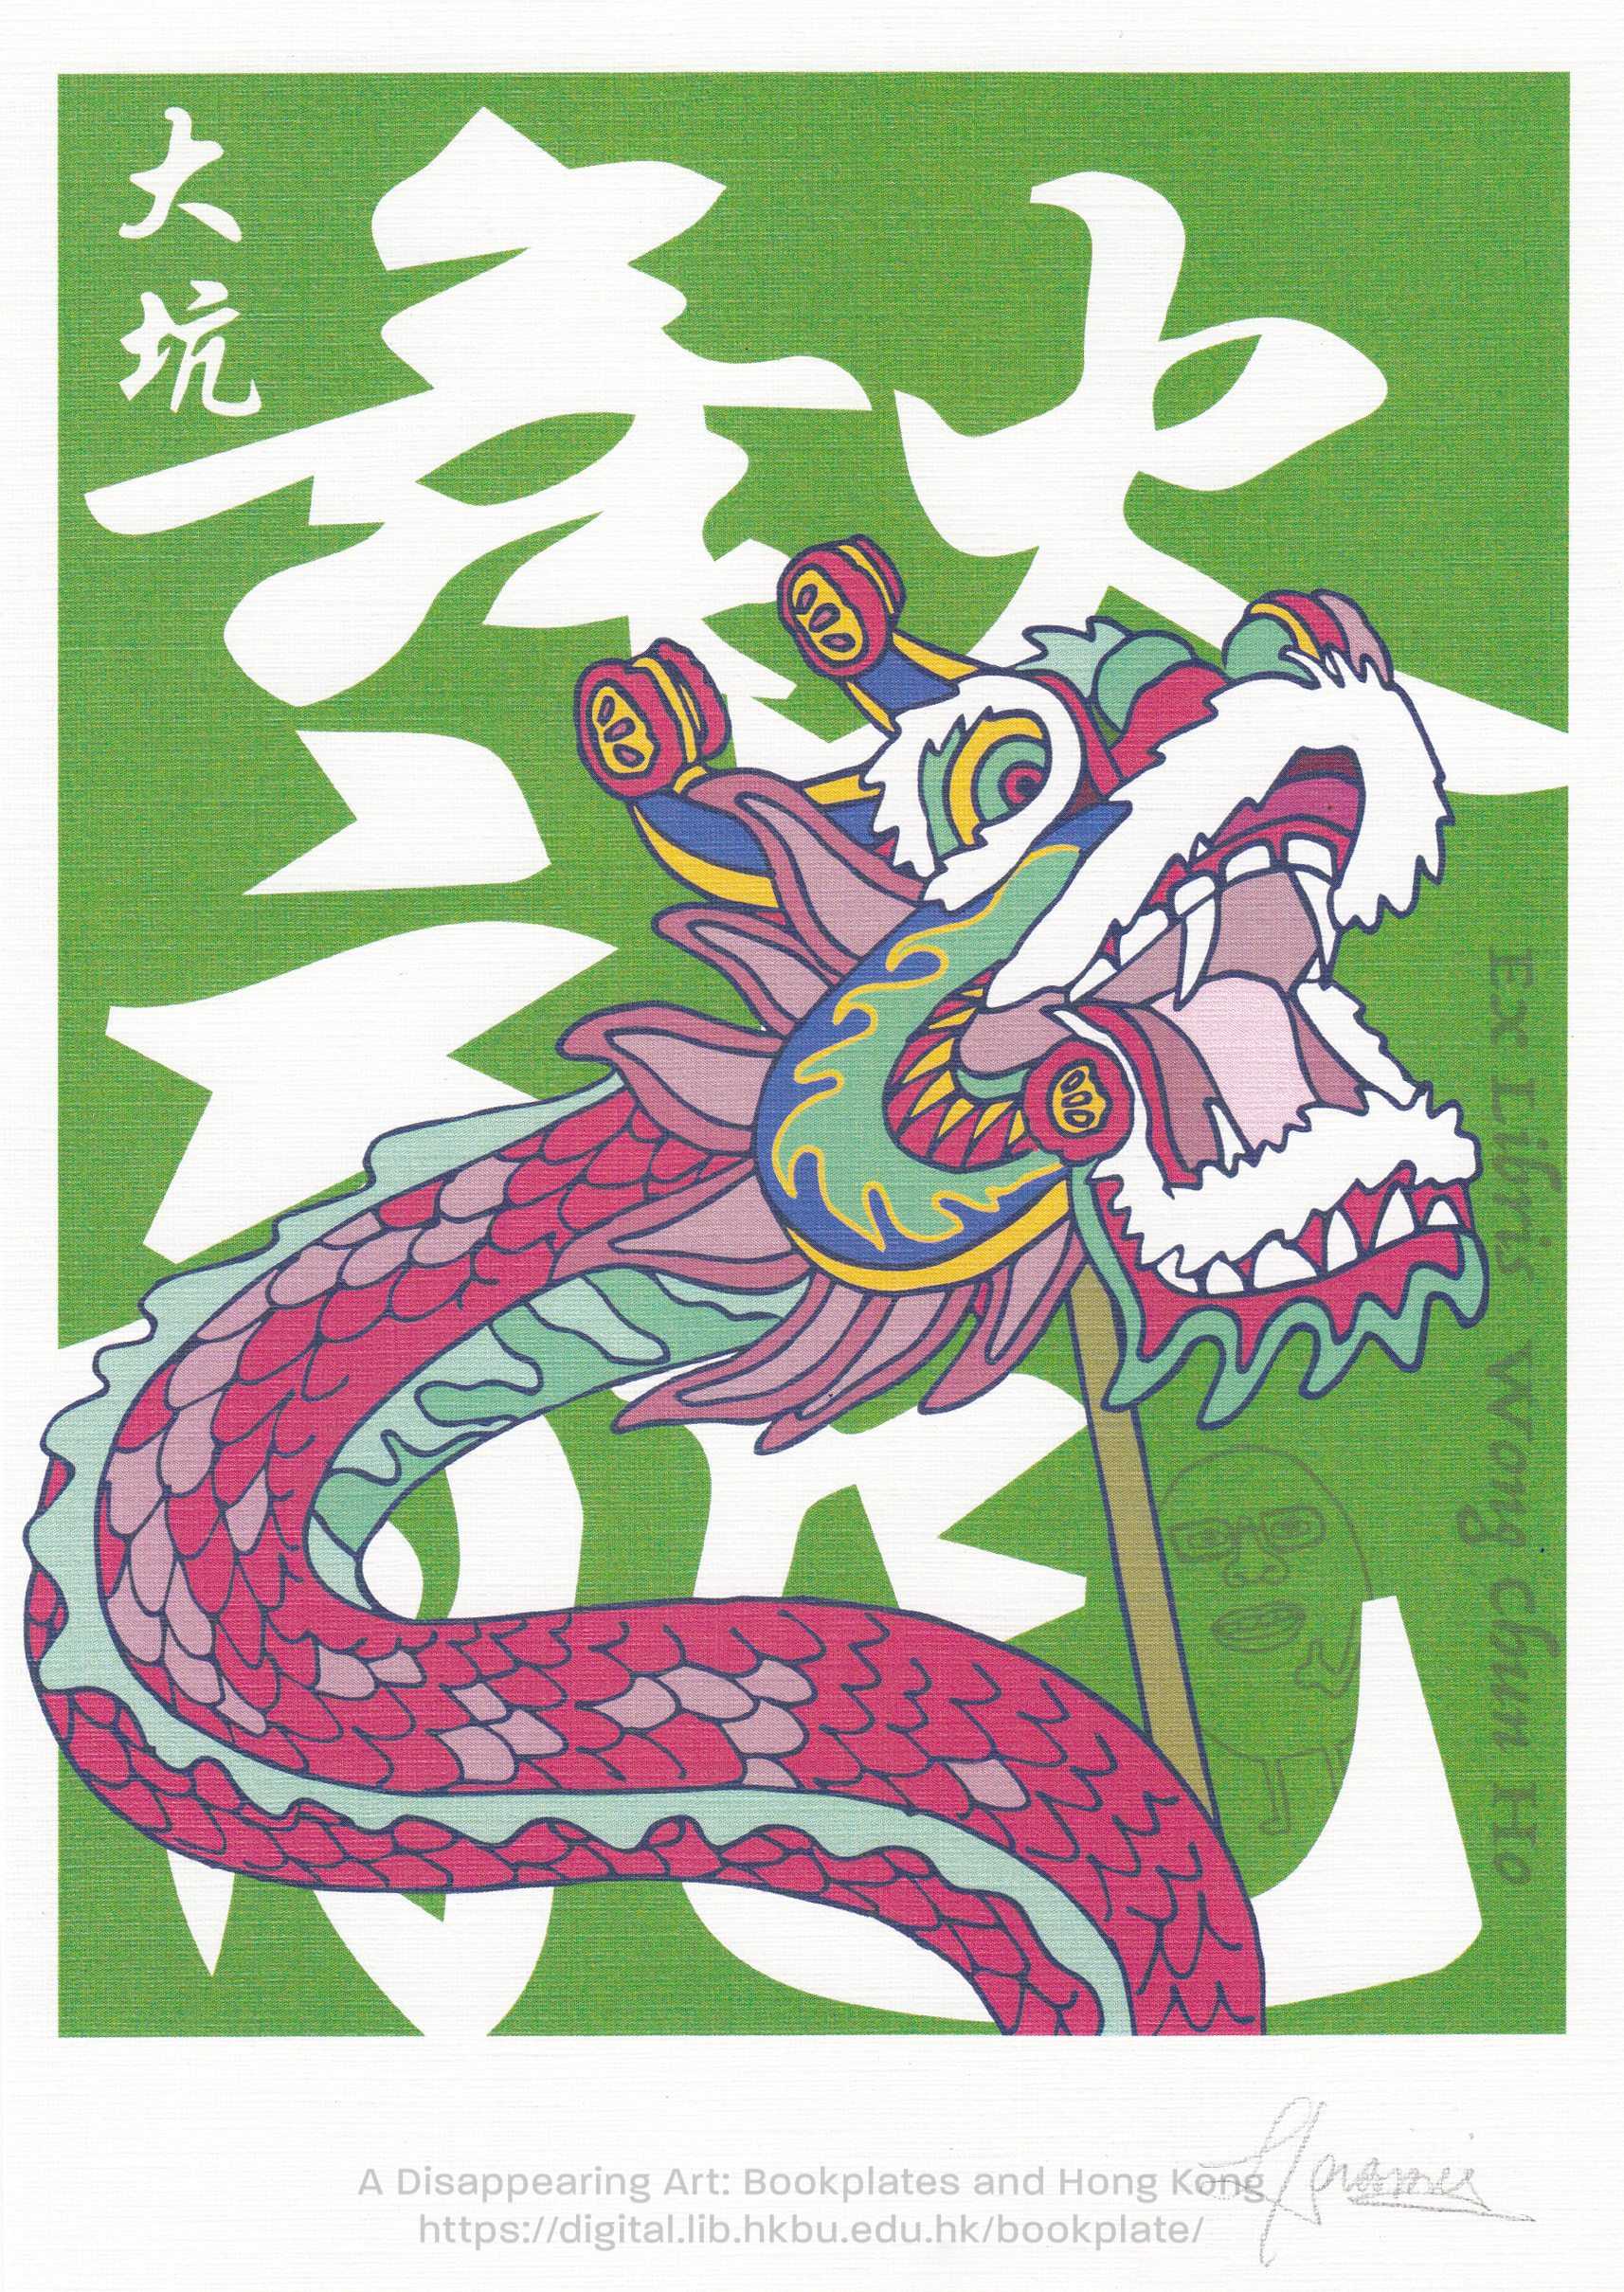 bookplate 藏書票 Ex Libris Association WONG, Chun Ho 王鎮濠